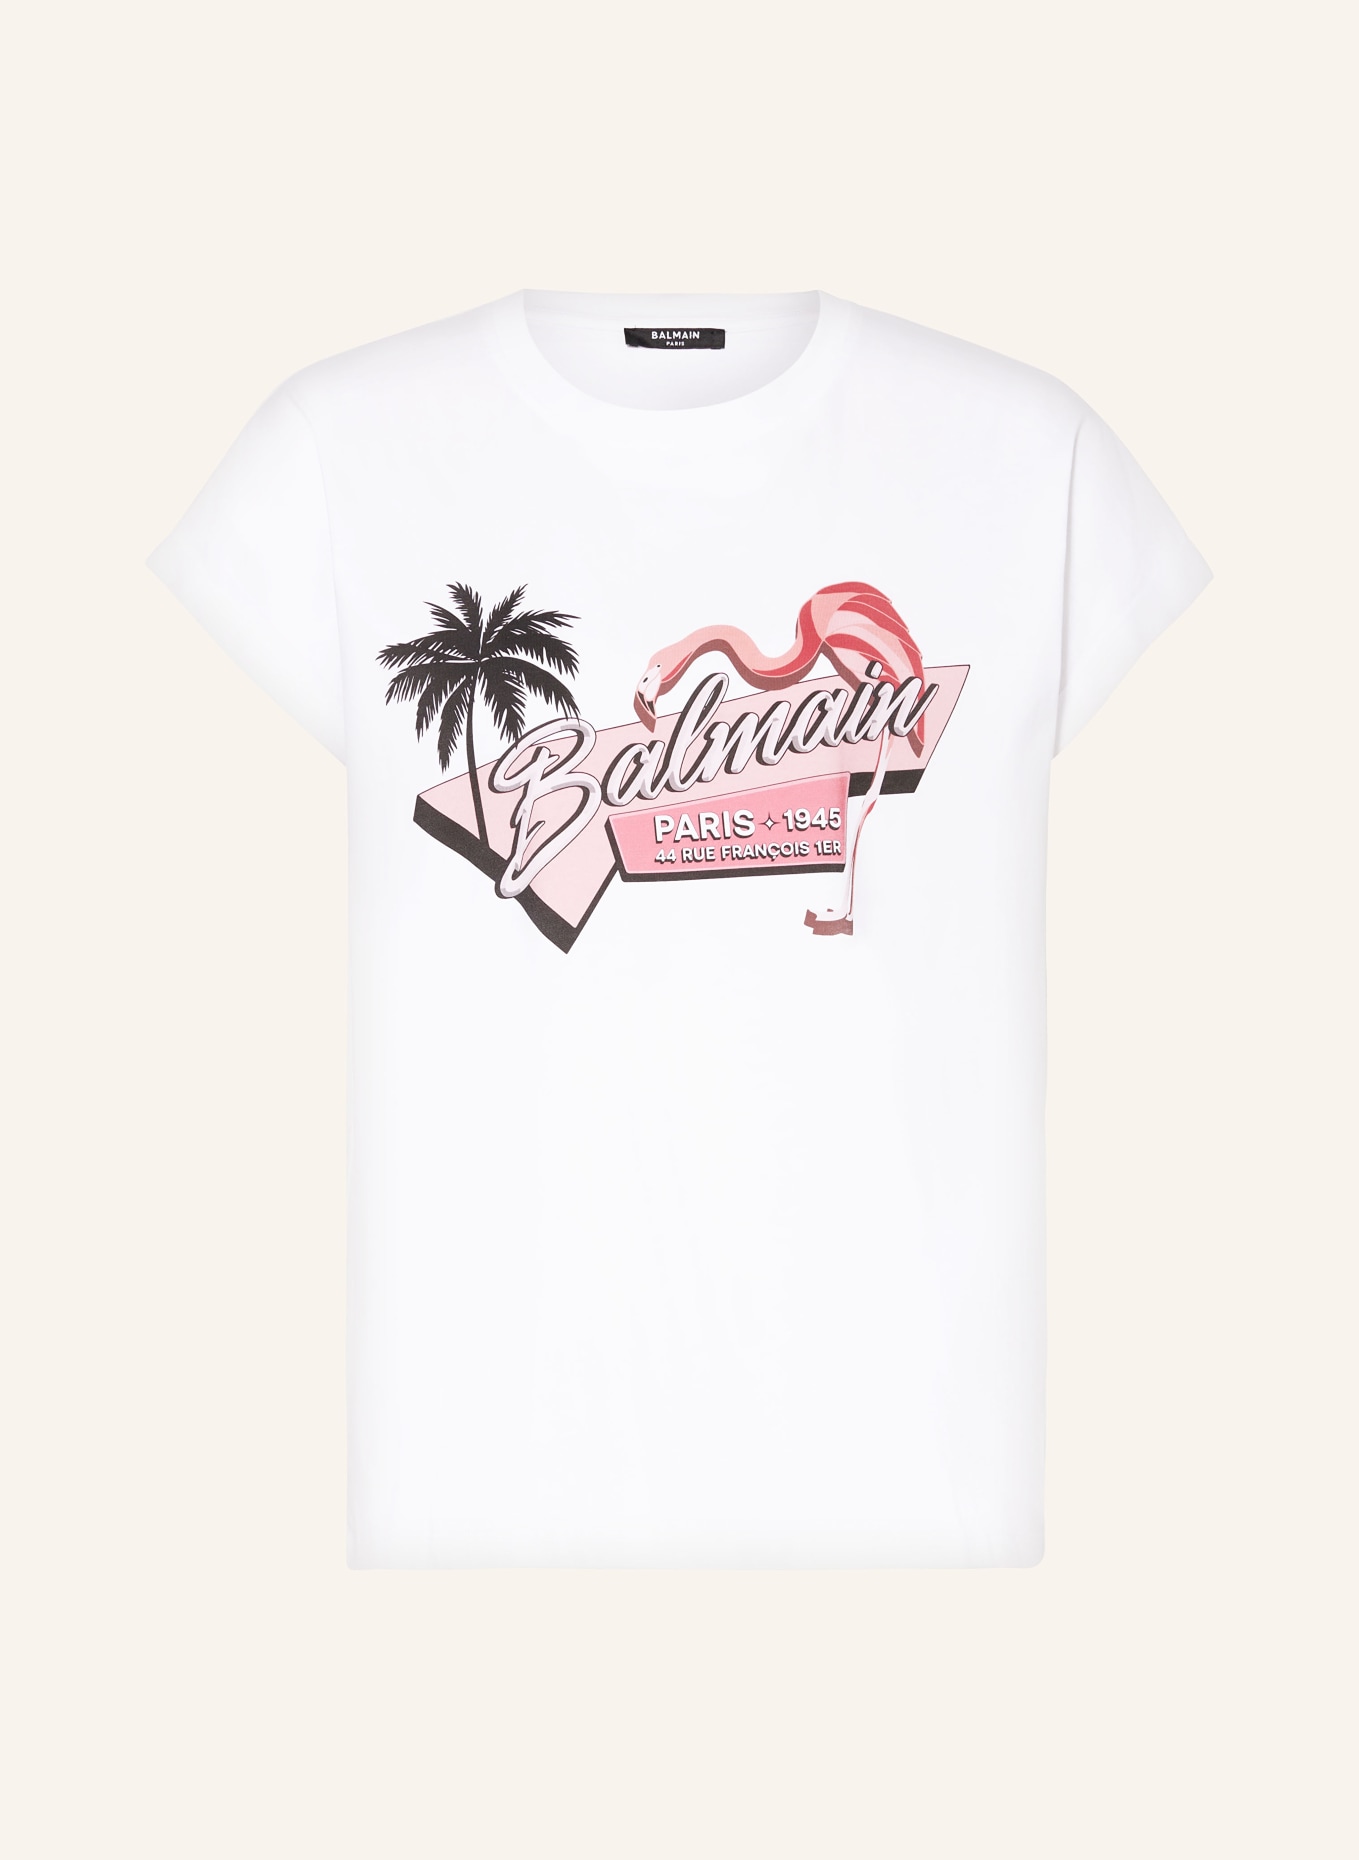 BALMAIN T-shirt, Color: WHITE (Image 1)